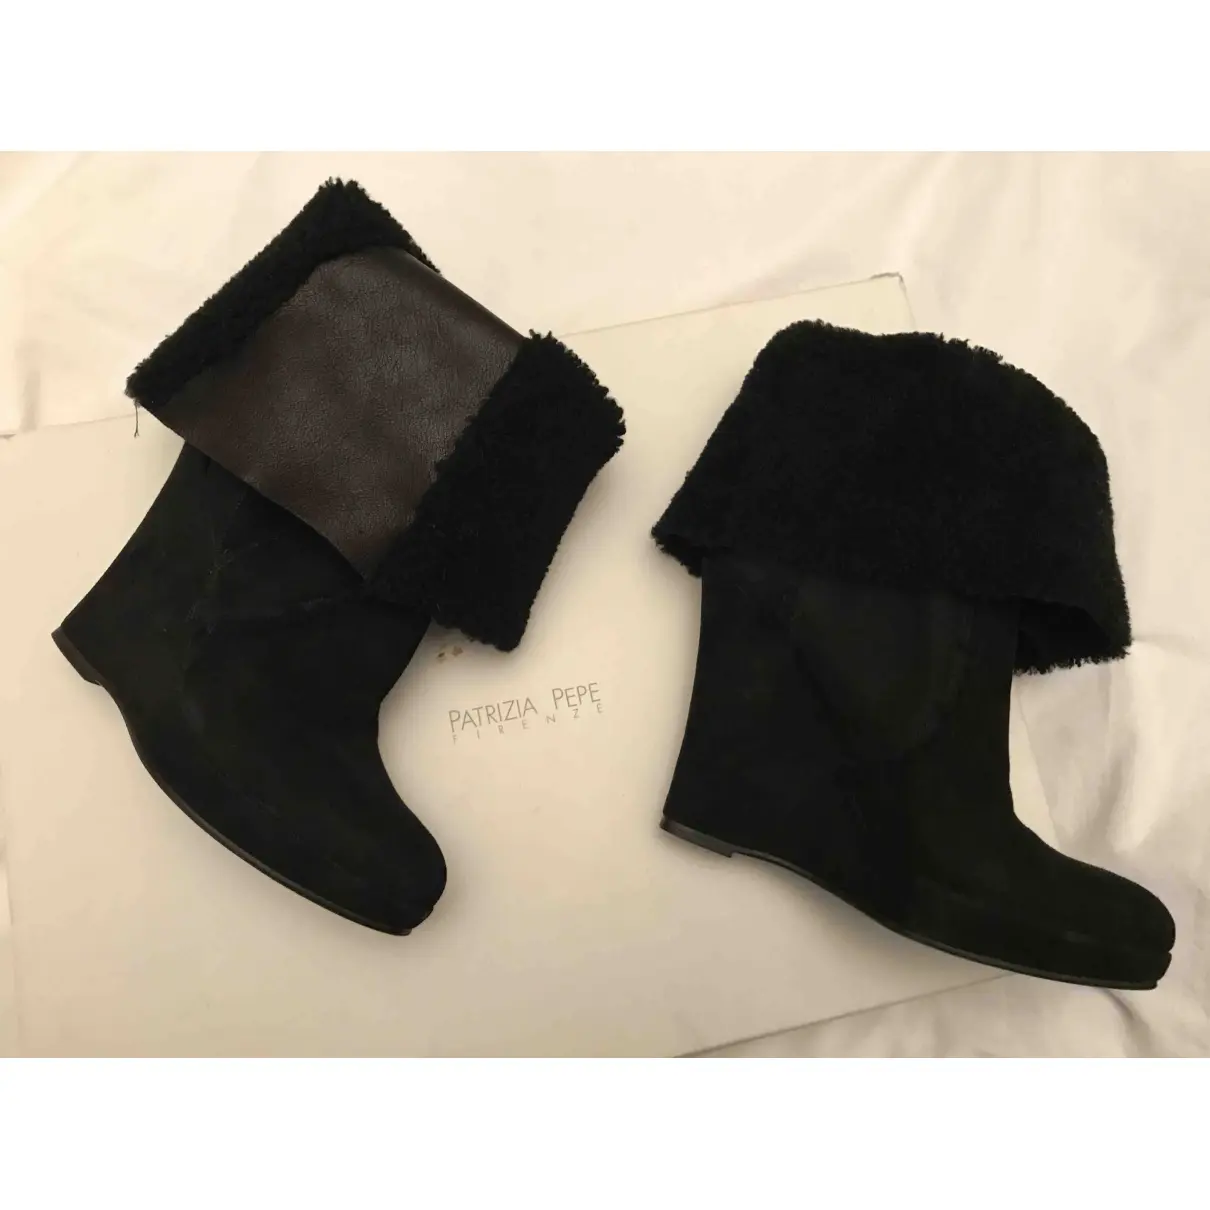 Buy Patrizia Pepe Snow boots online